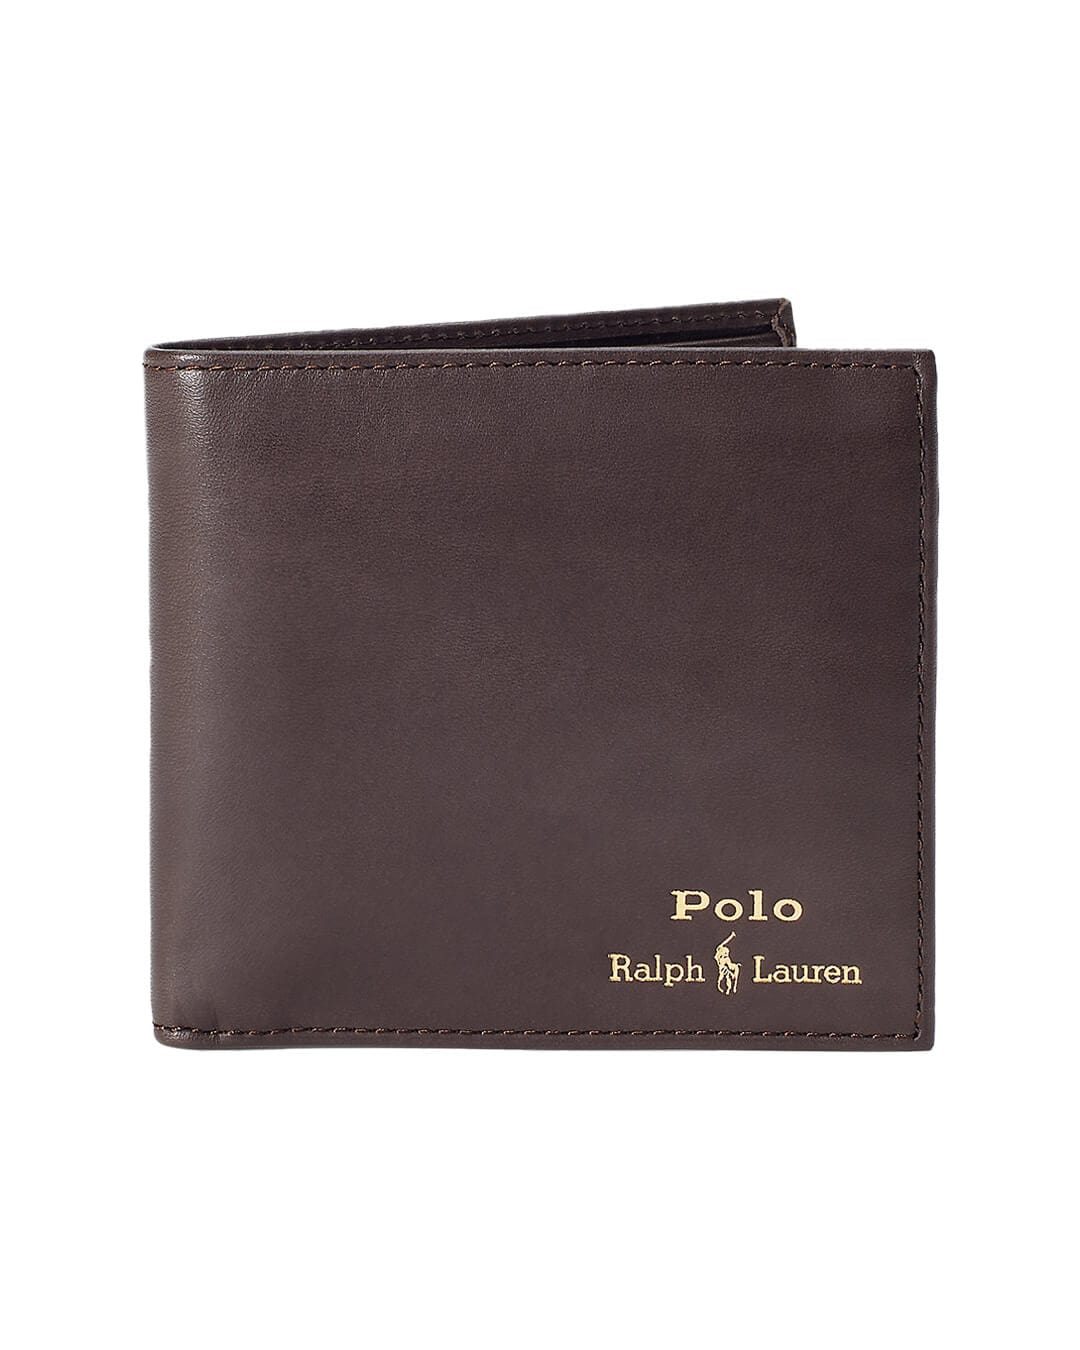 Polo Ralph Lauren Wallets ONE SIZE Polo Ralph Lauren Brown Leather Billfold Wallet